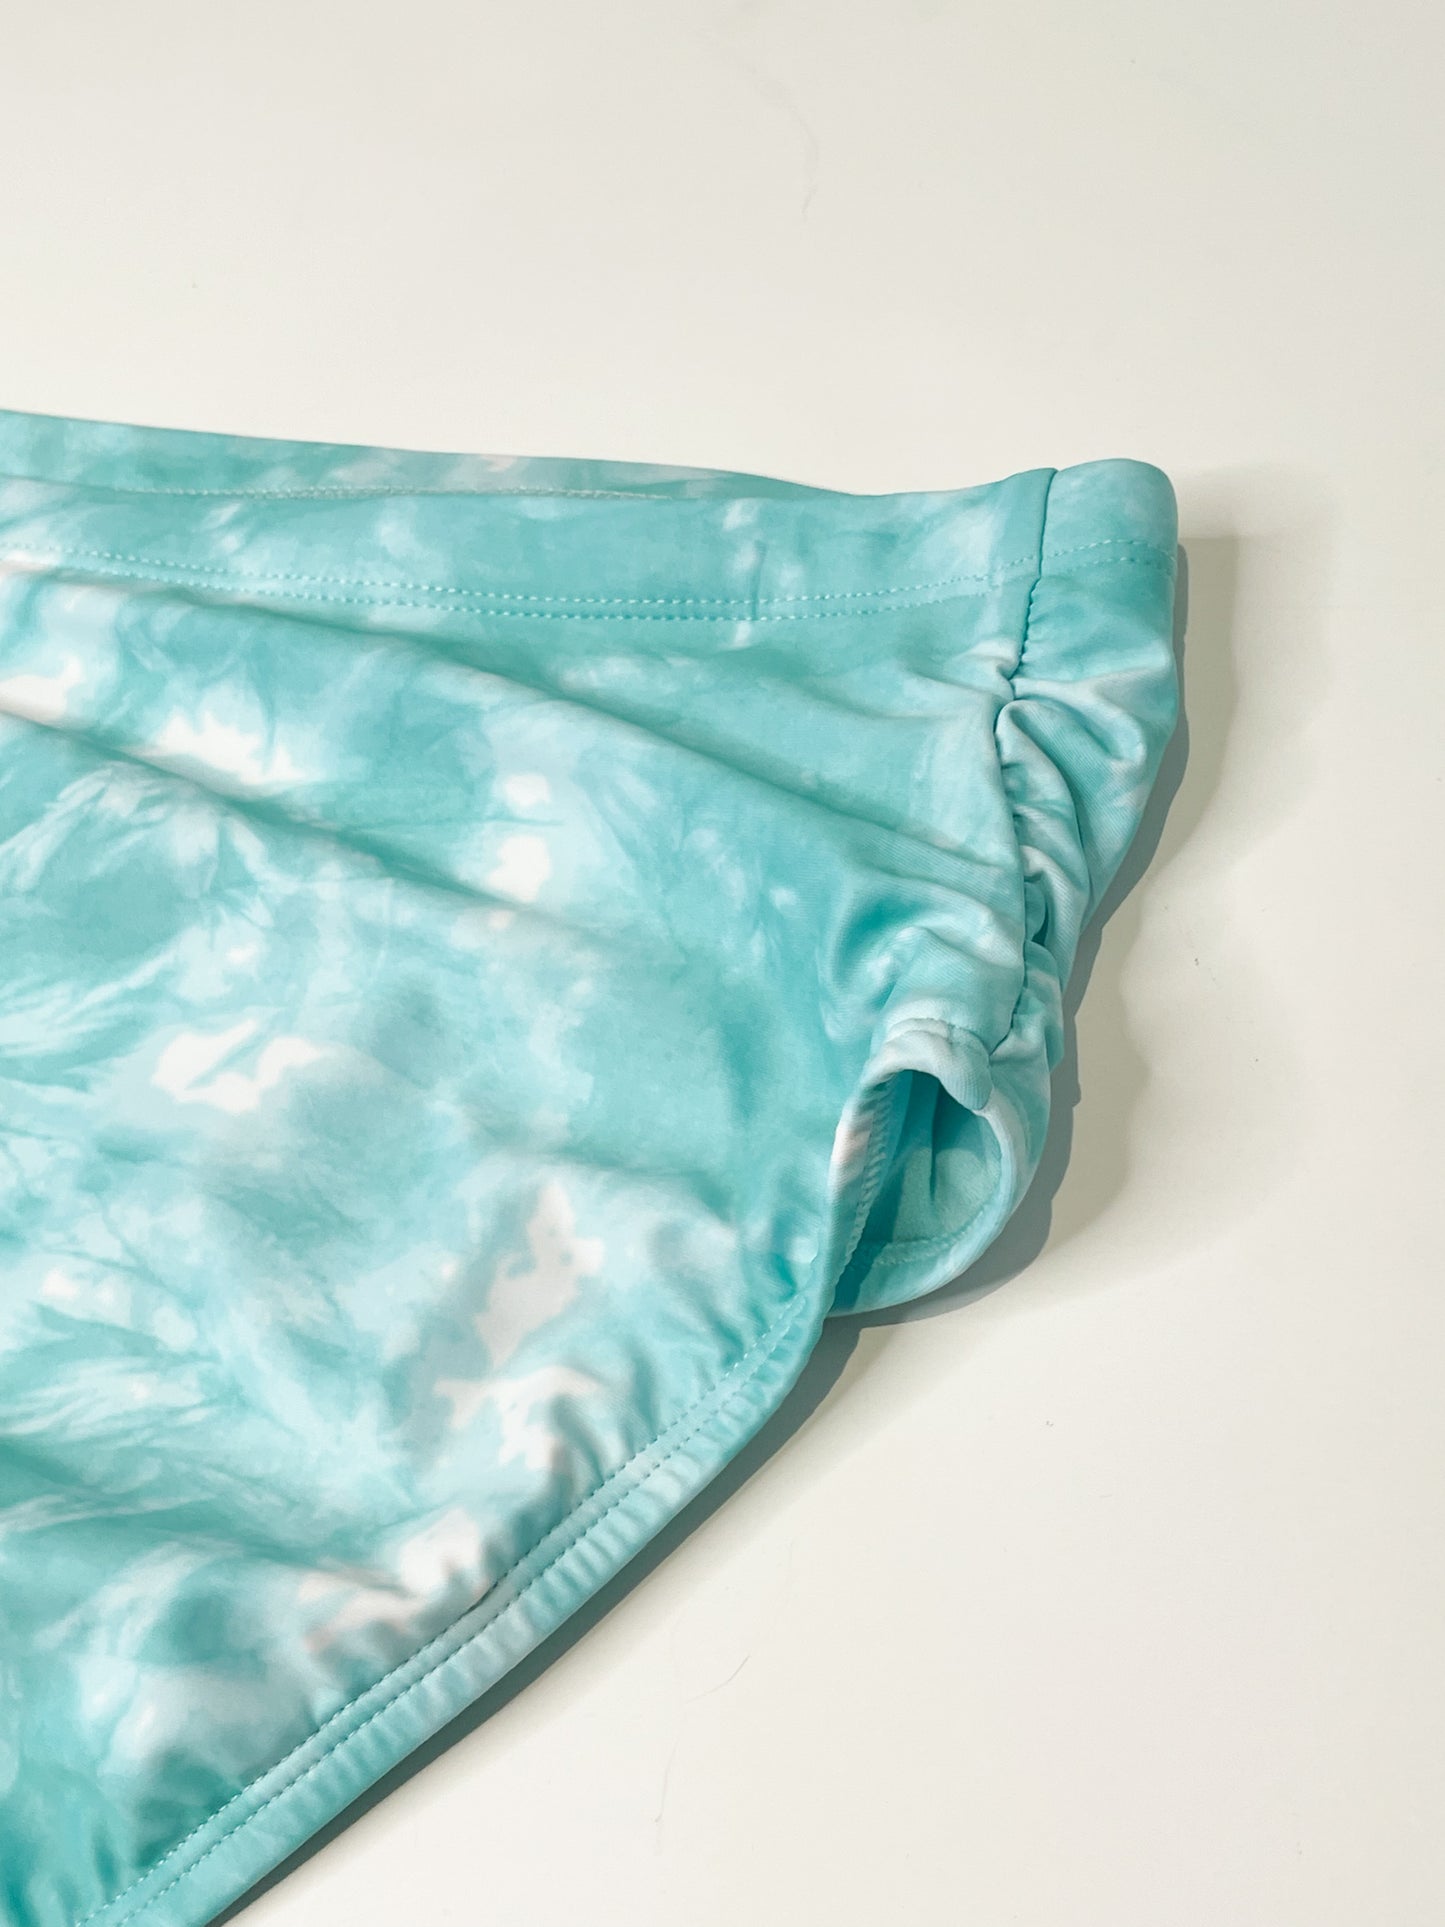 Aqua Blue High Waist Tie-Dyed Bikini Bottoms - L/XL